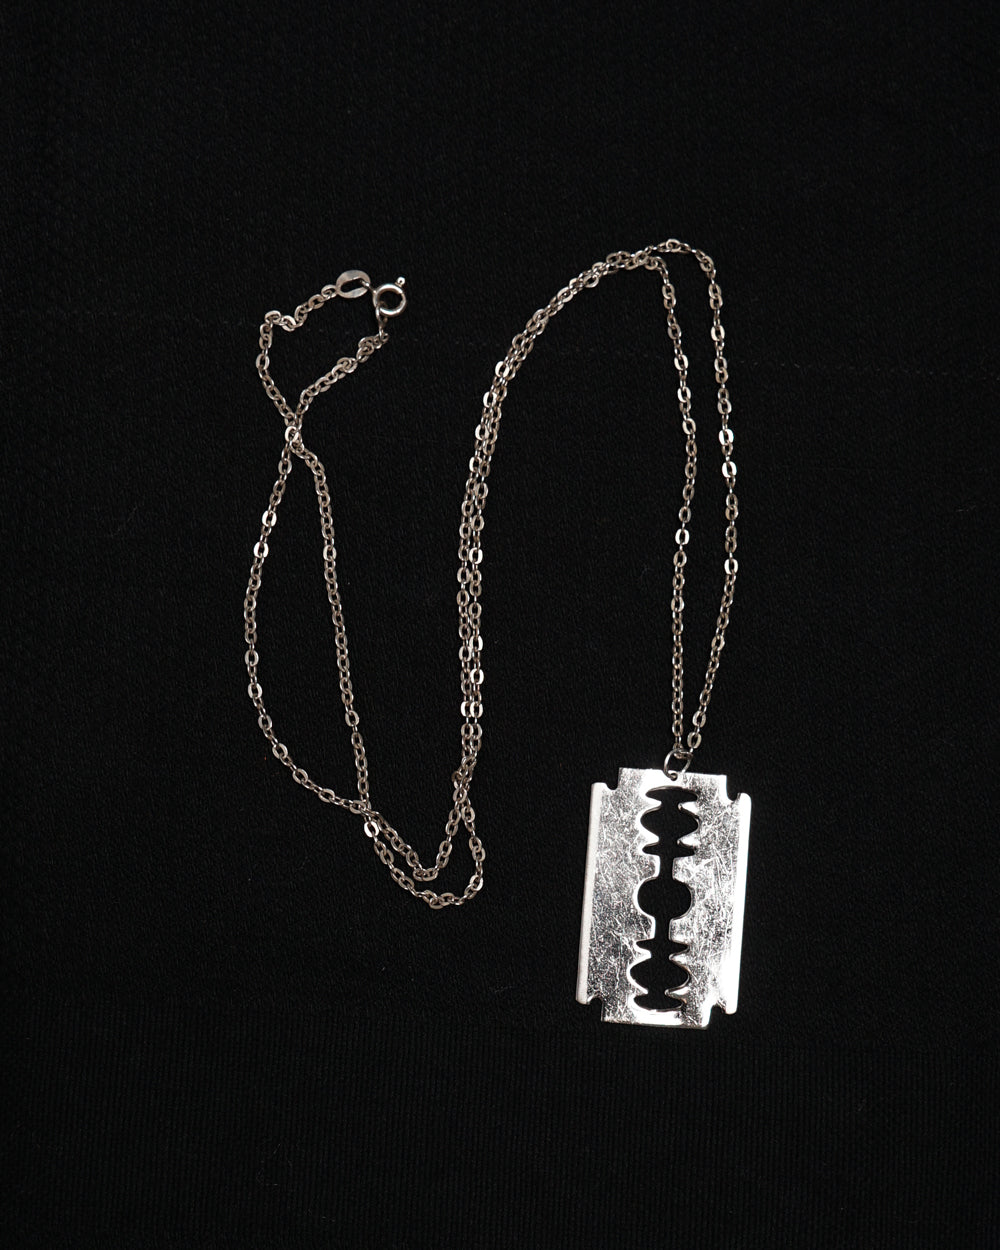 Silver Chain Necklace w/ Razor Charm